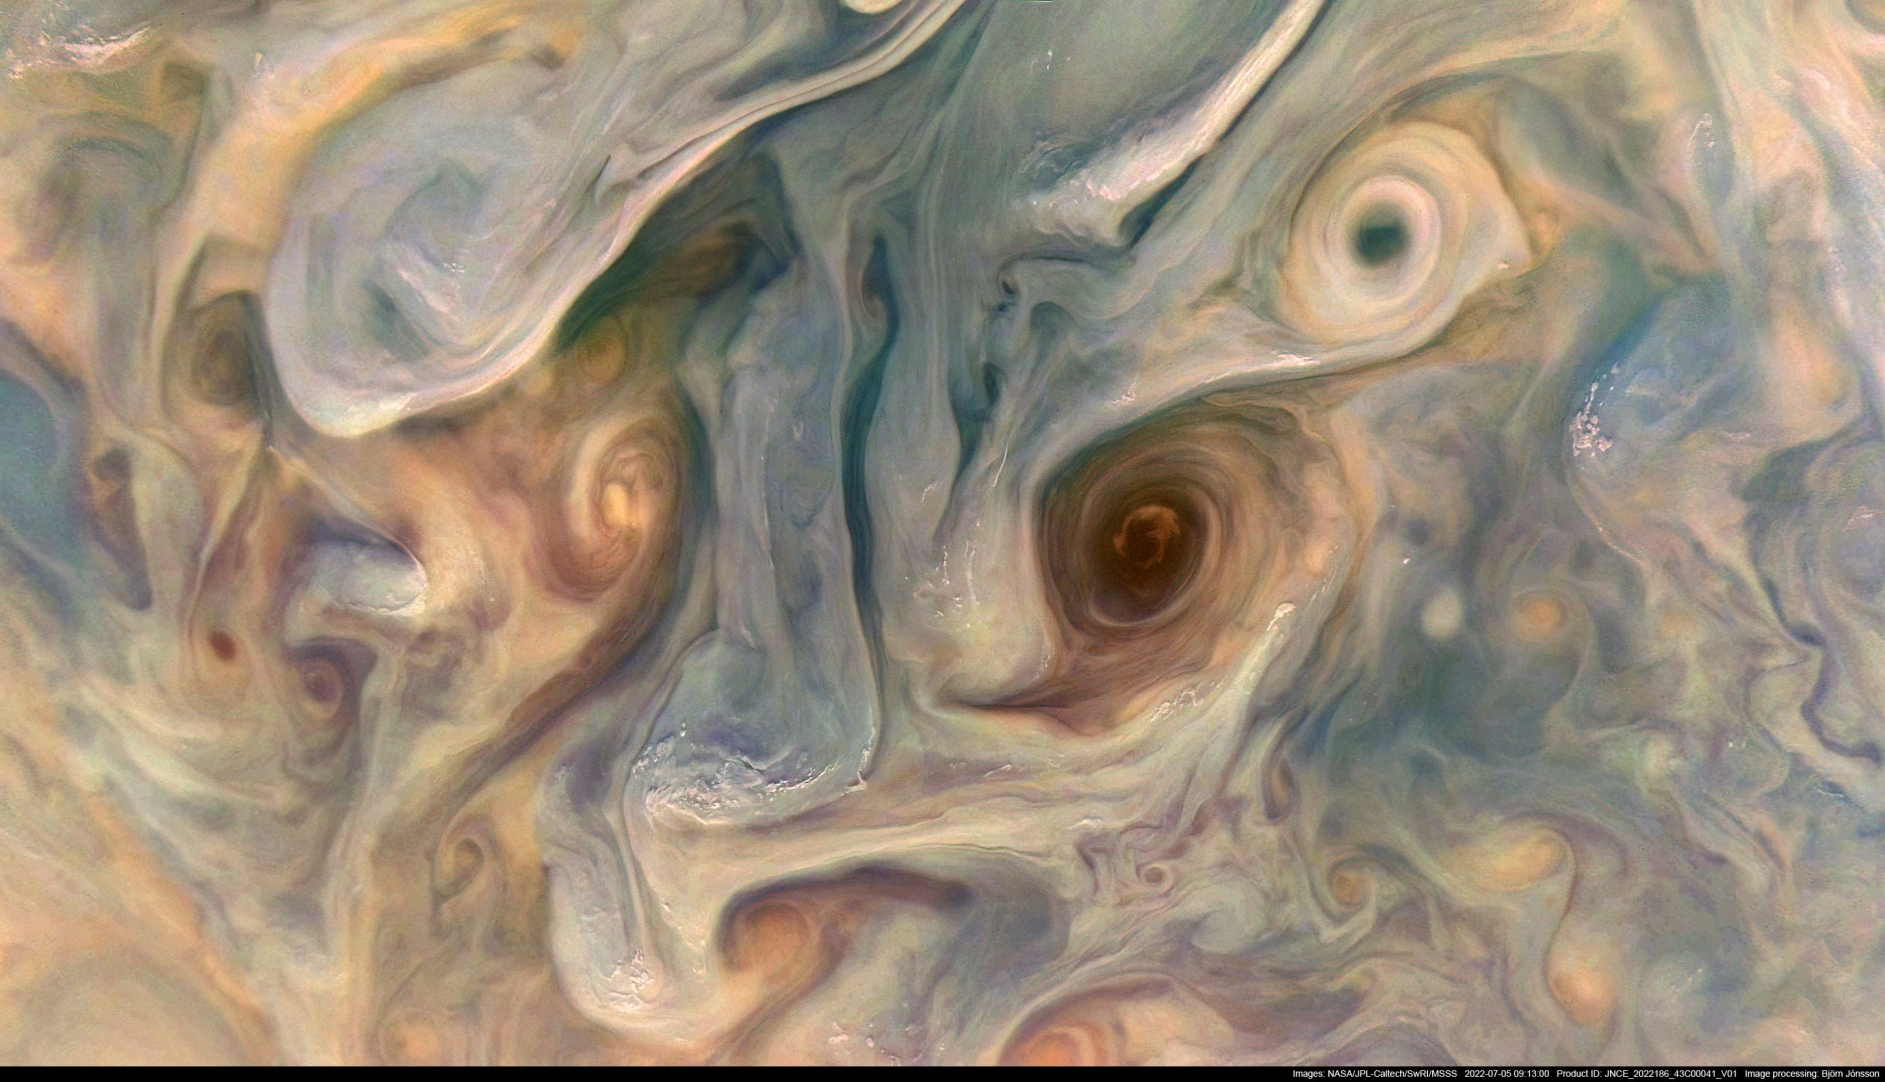 Obrađena verzija slike Jupiterove atmosfere koju je snimila NASA-ina letjelica (©NASA/JPL-Caltech/SwRI/MSSS/Björn Jónsson).